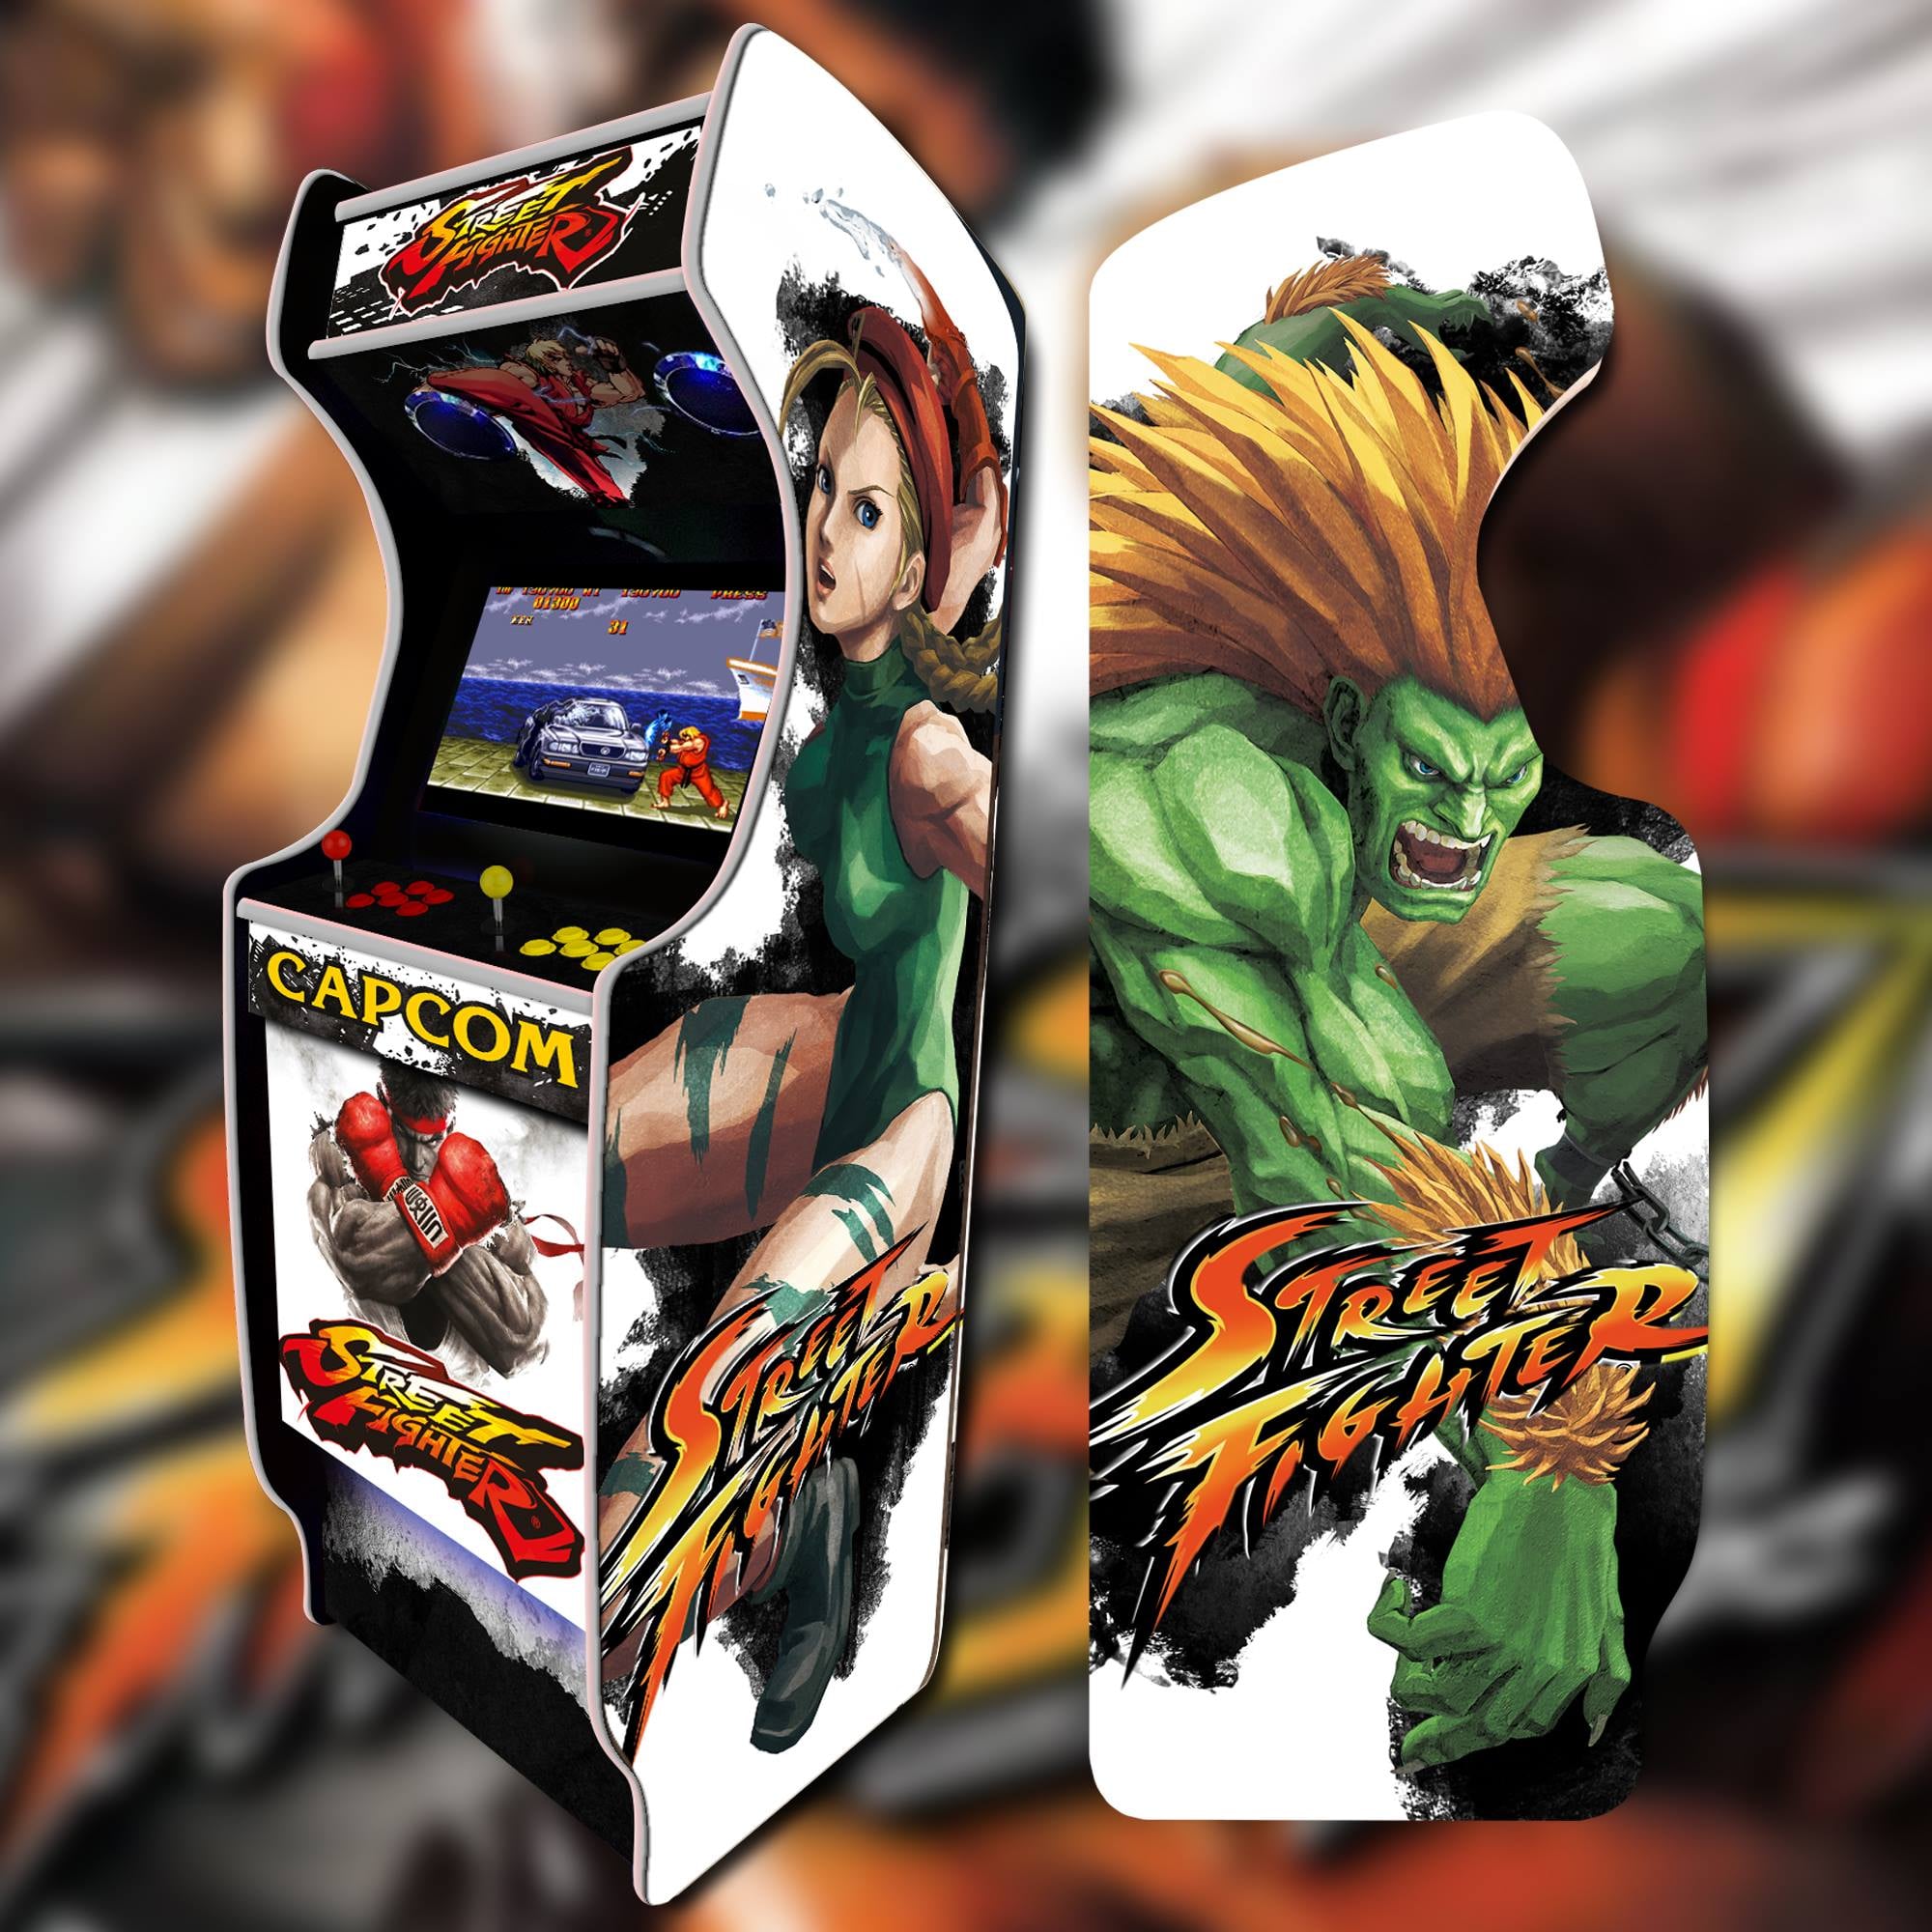 borne daracade Street Fighter esil game.fr  1 - Location Borne arcade Street-Fighter 2800 jeux